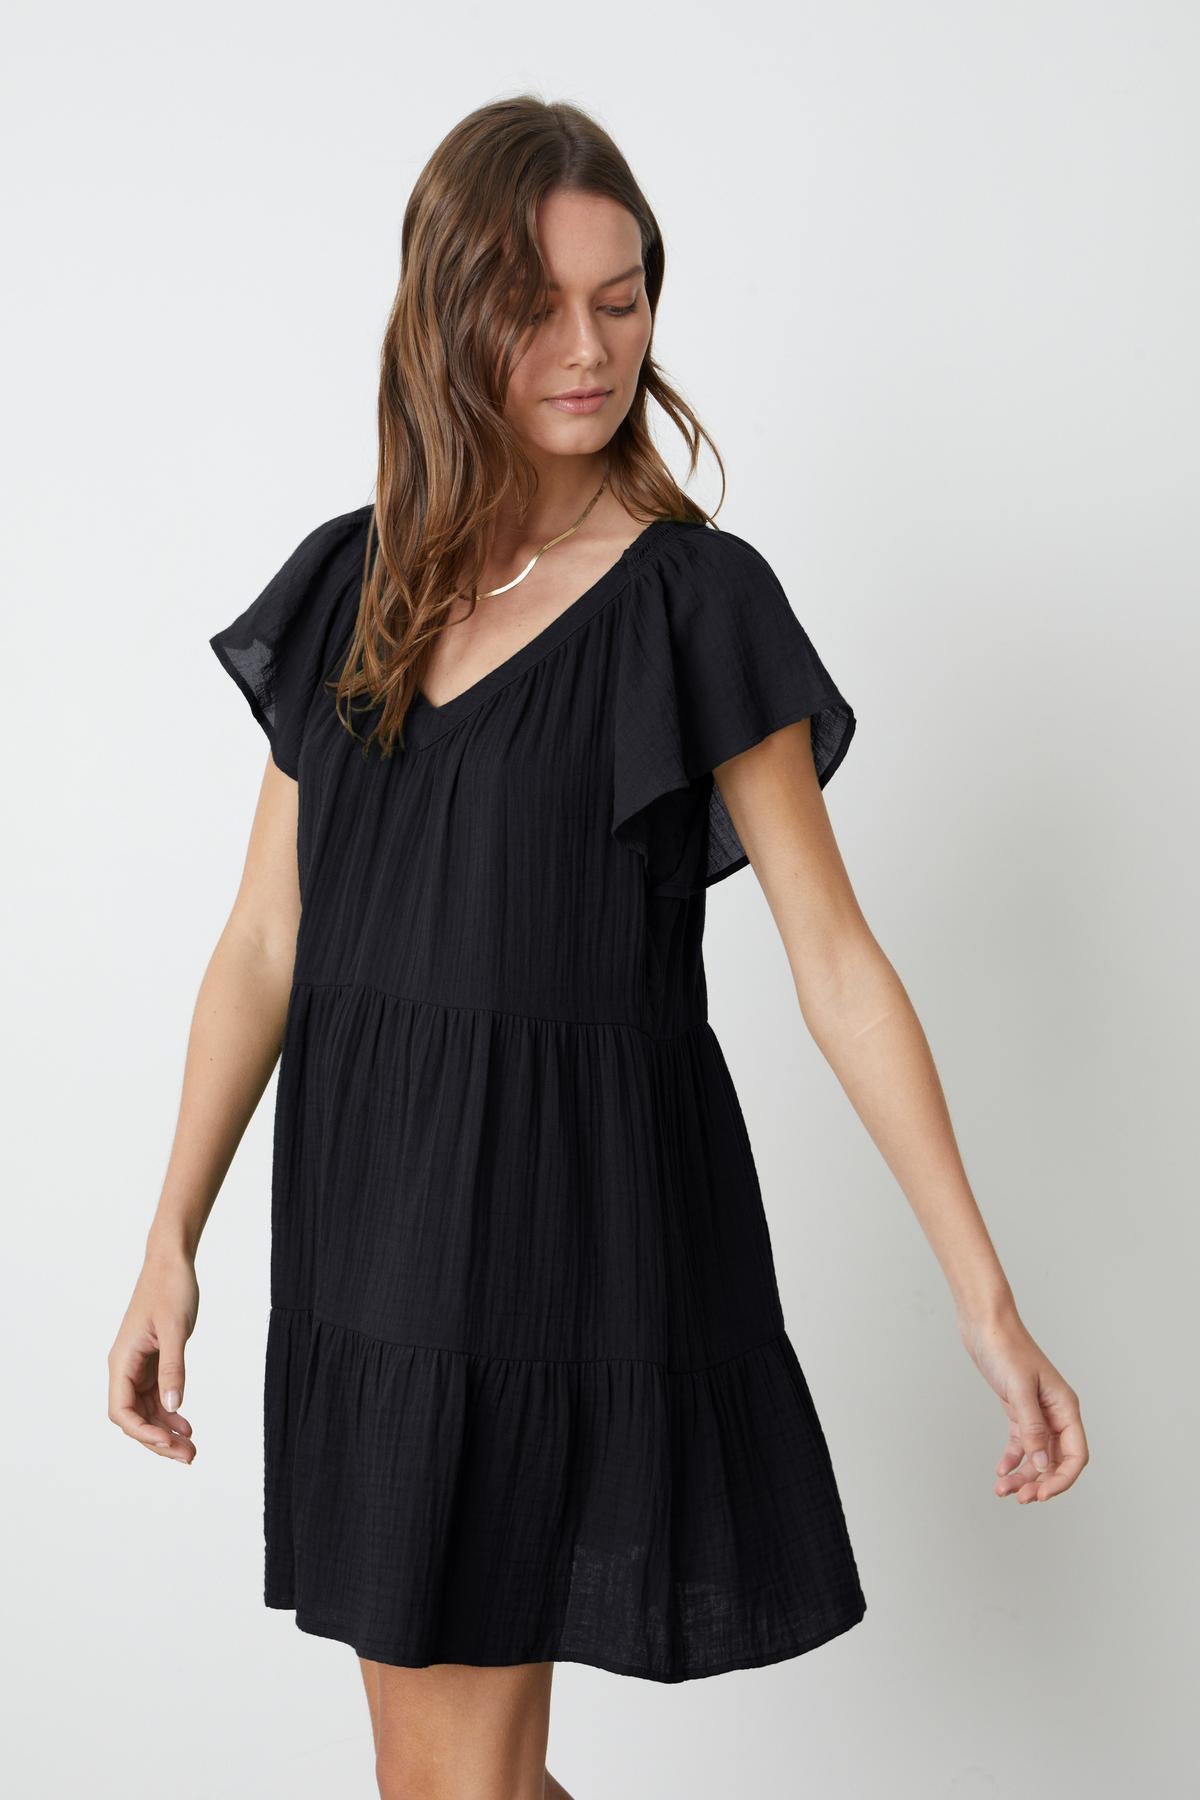 Eleanor Tiered Dress in black cotton gauze front & side-26262132654273